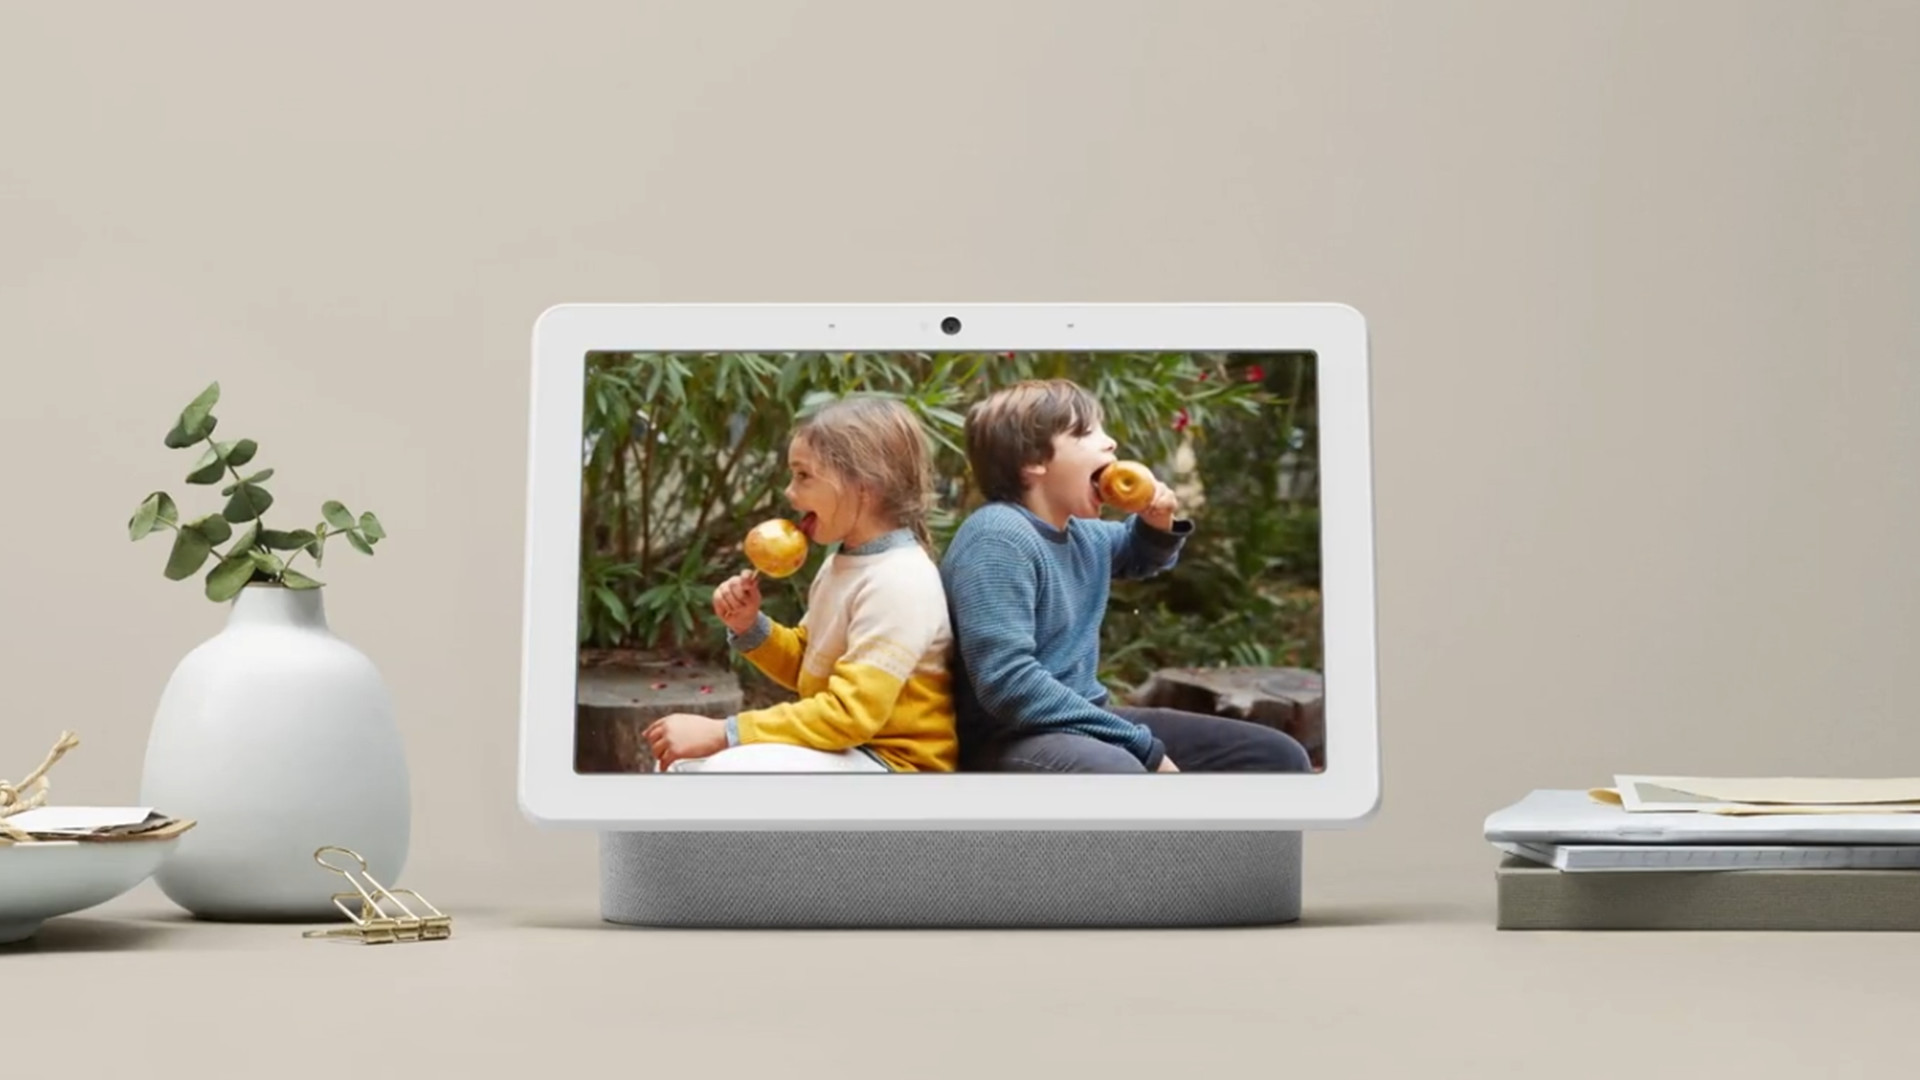 Google Nest Hub Max - Smart Home Display - Google Store